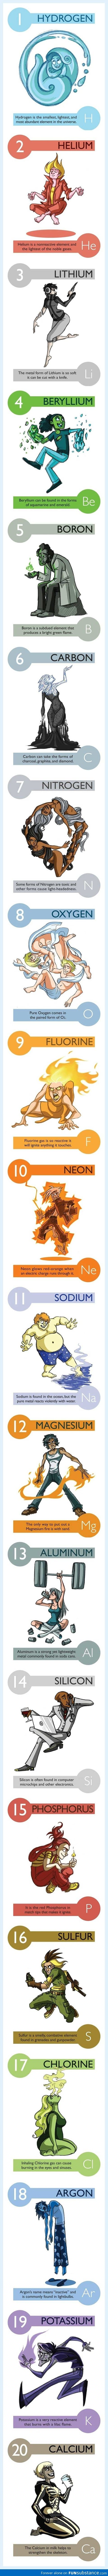 Cartoon elements makes the periodic table fun